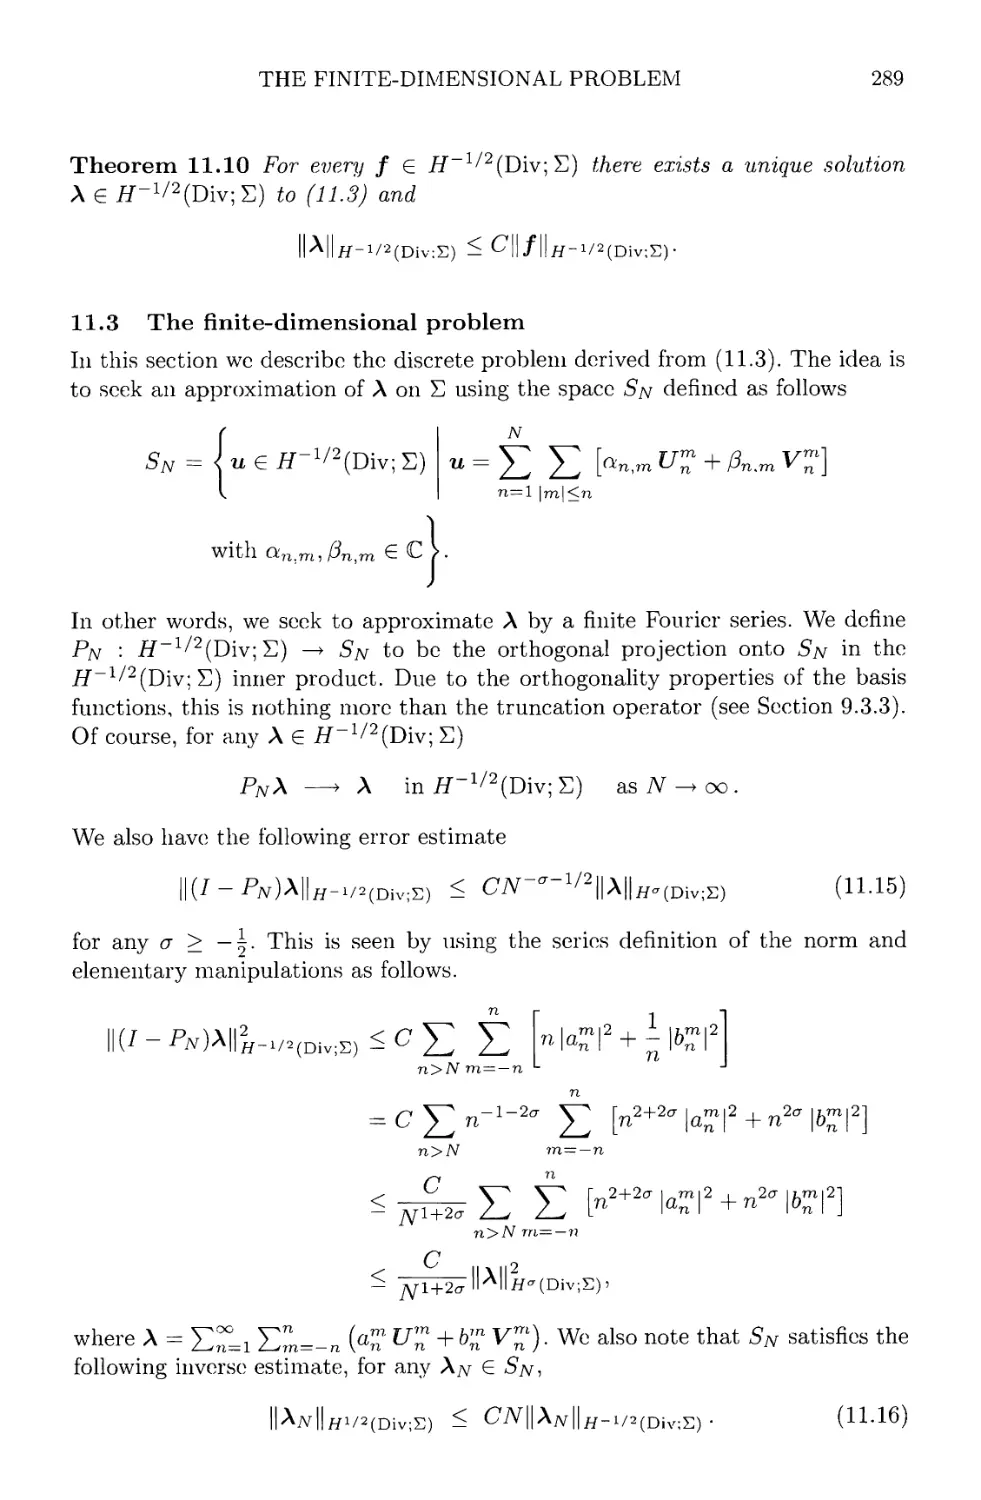 11.3 The finite-dimensional problem